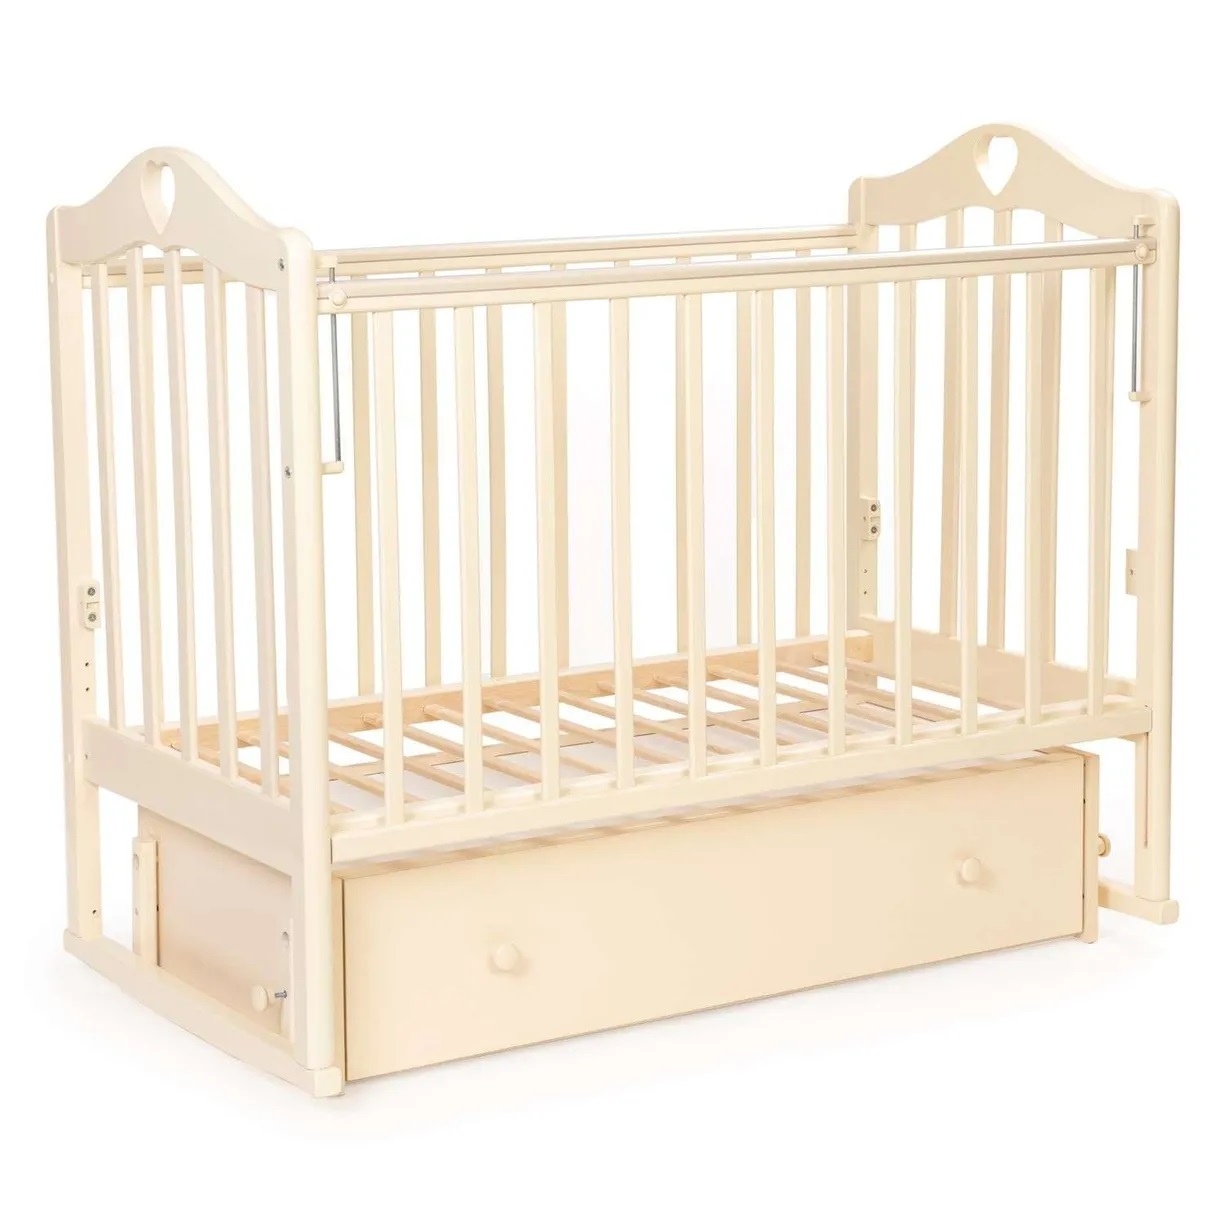 Детские кровати Bebizaro - купить детскую кровать Bebizaro, цены на Мегамаркет